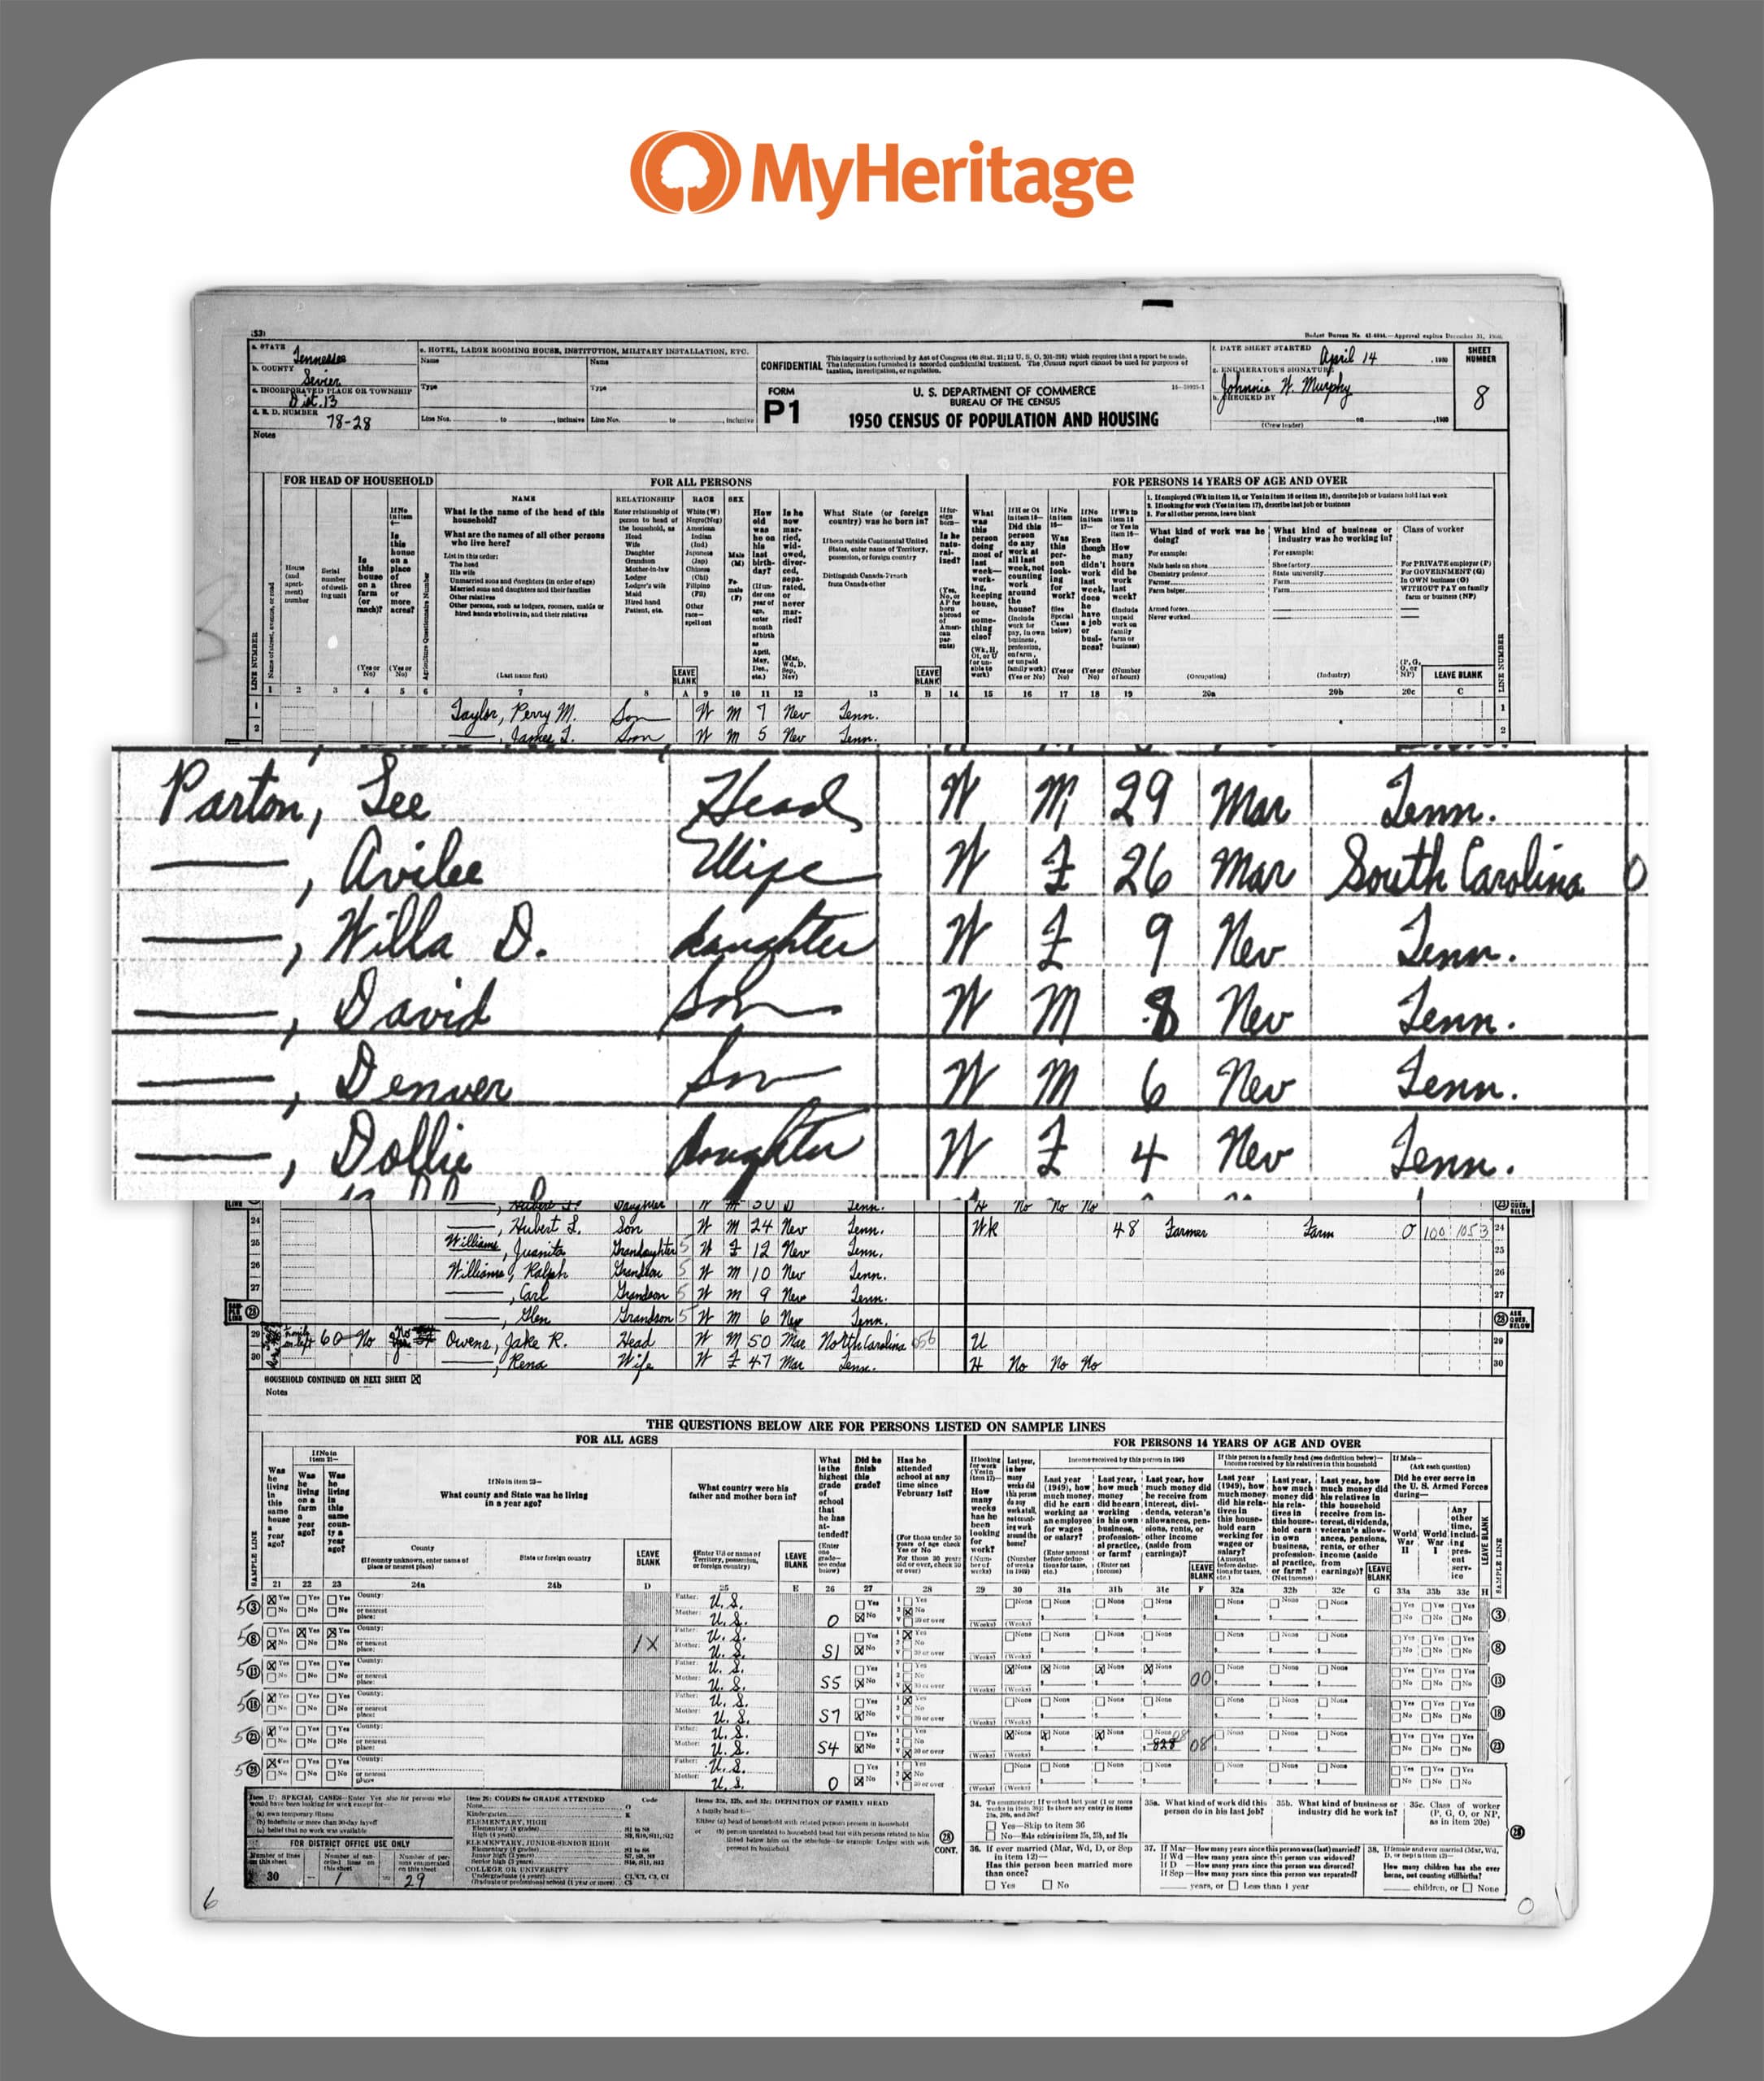 1950 Census record of Dolly Parton 